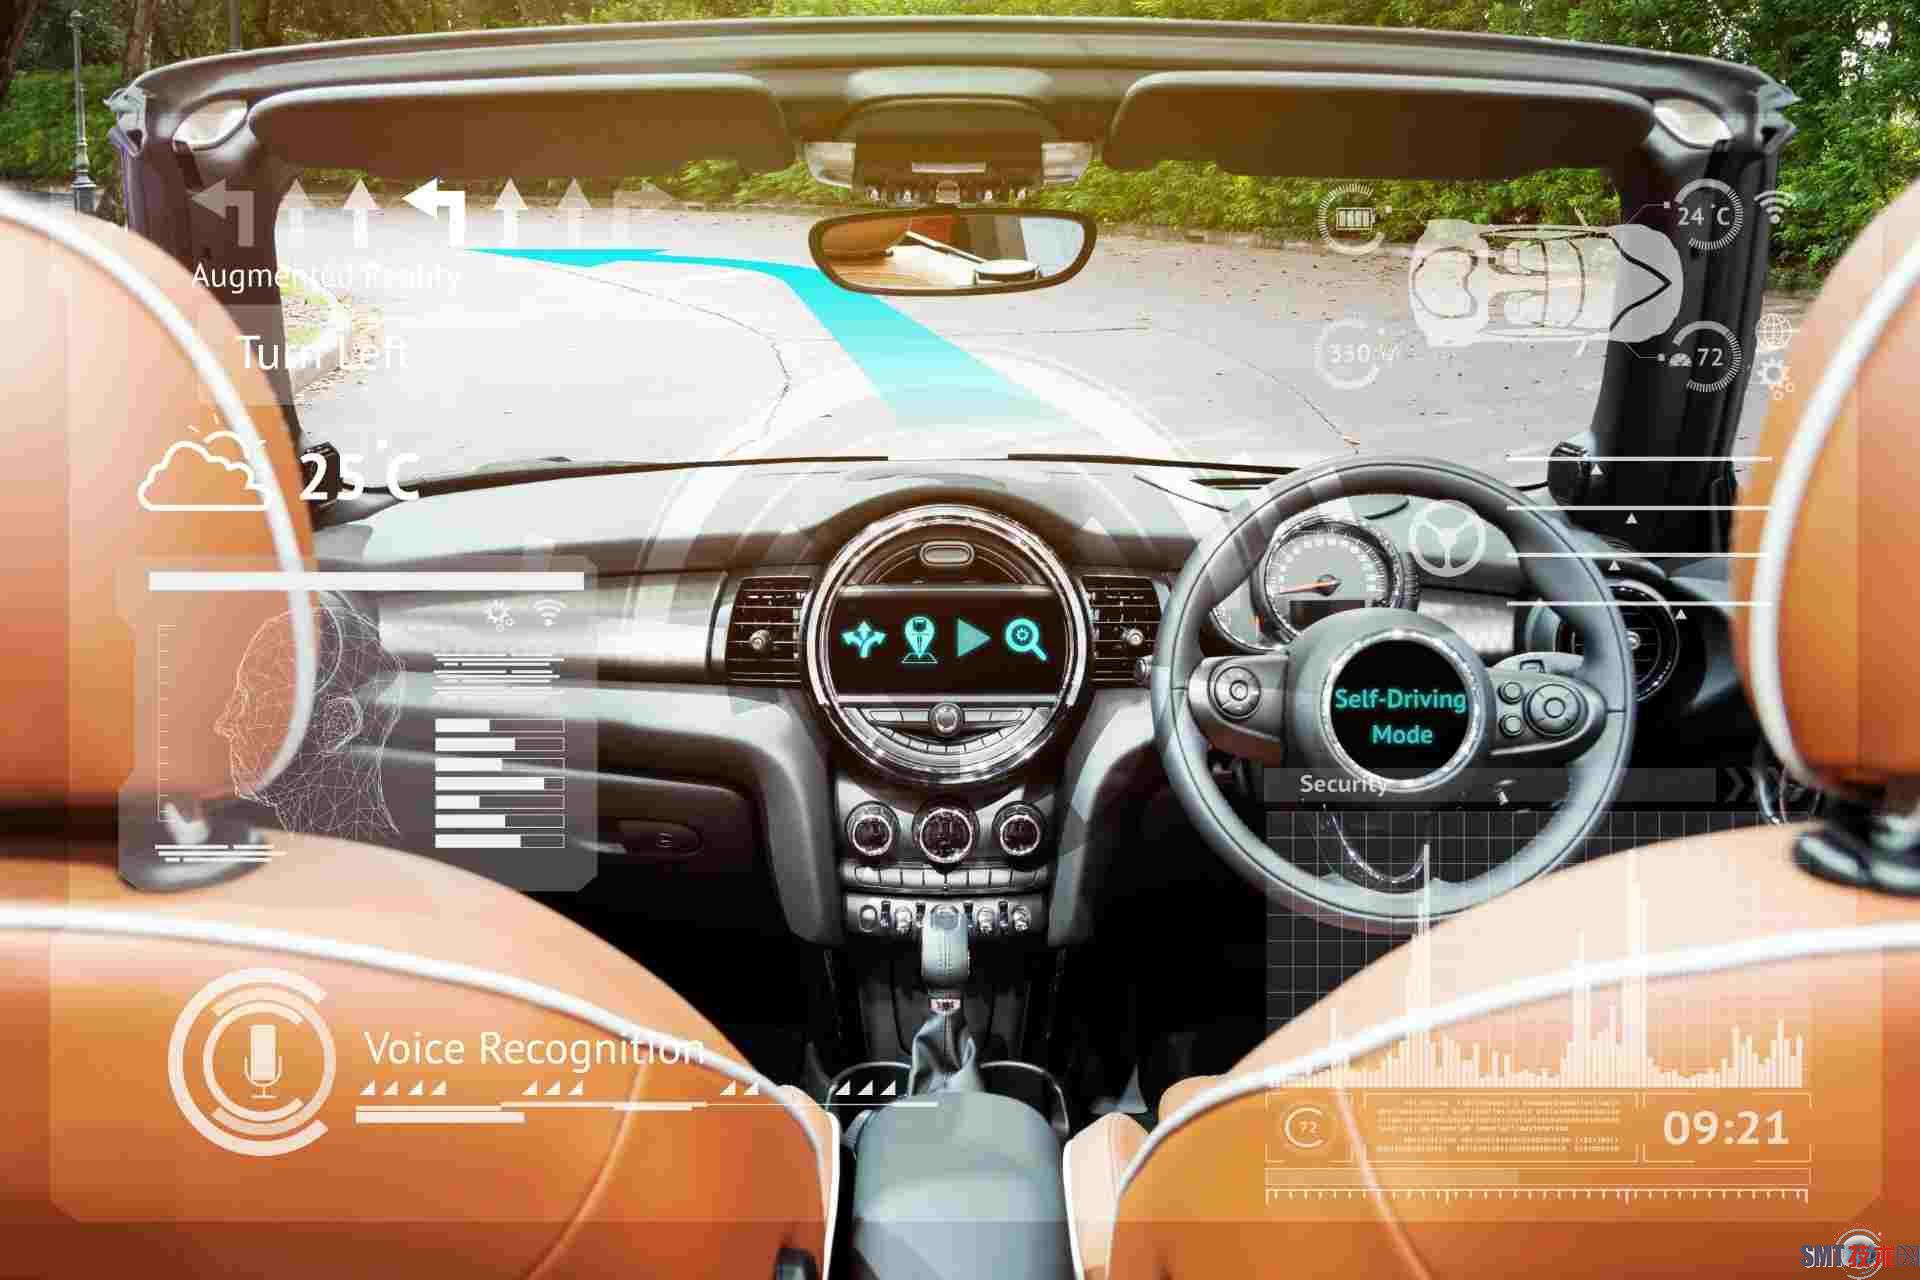 2022_02_augmented_reality_smart_car (1).jpg